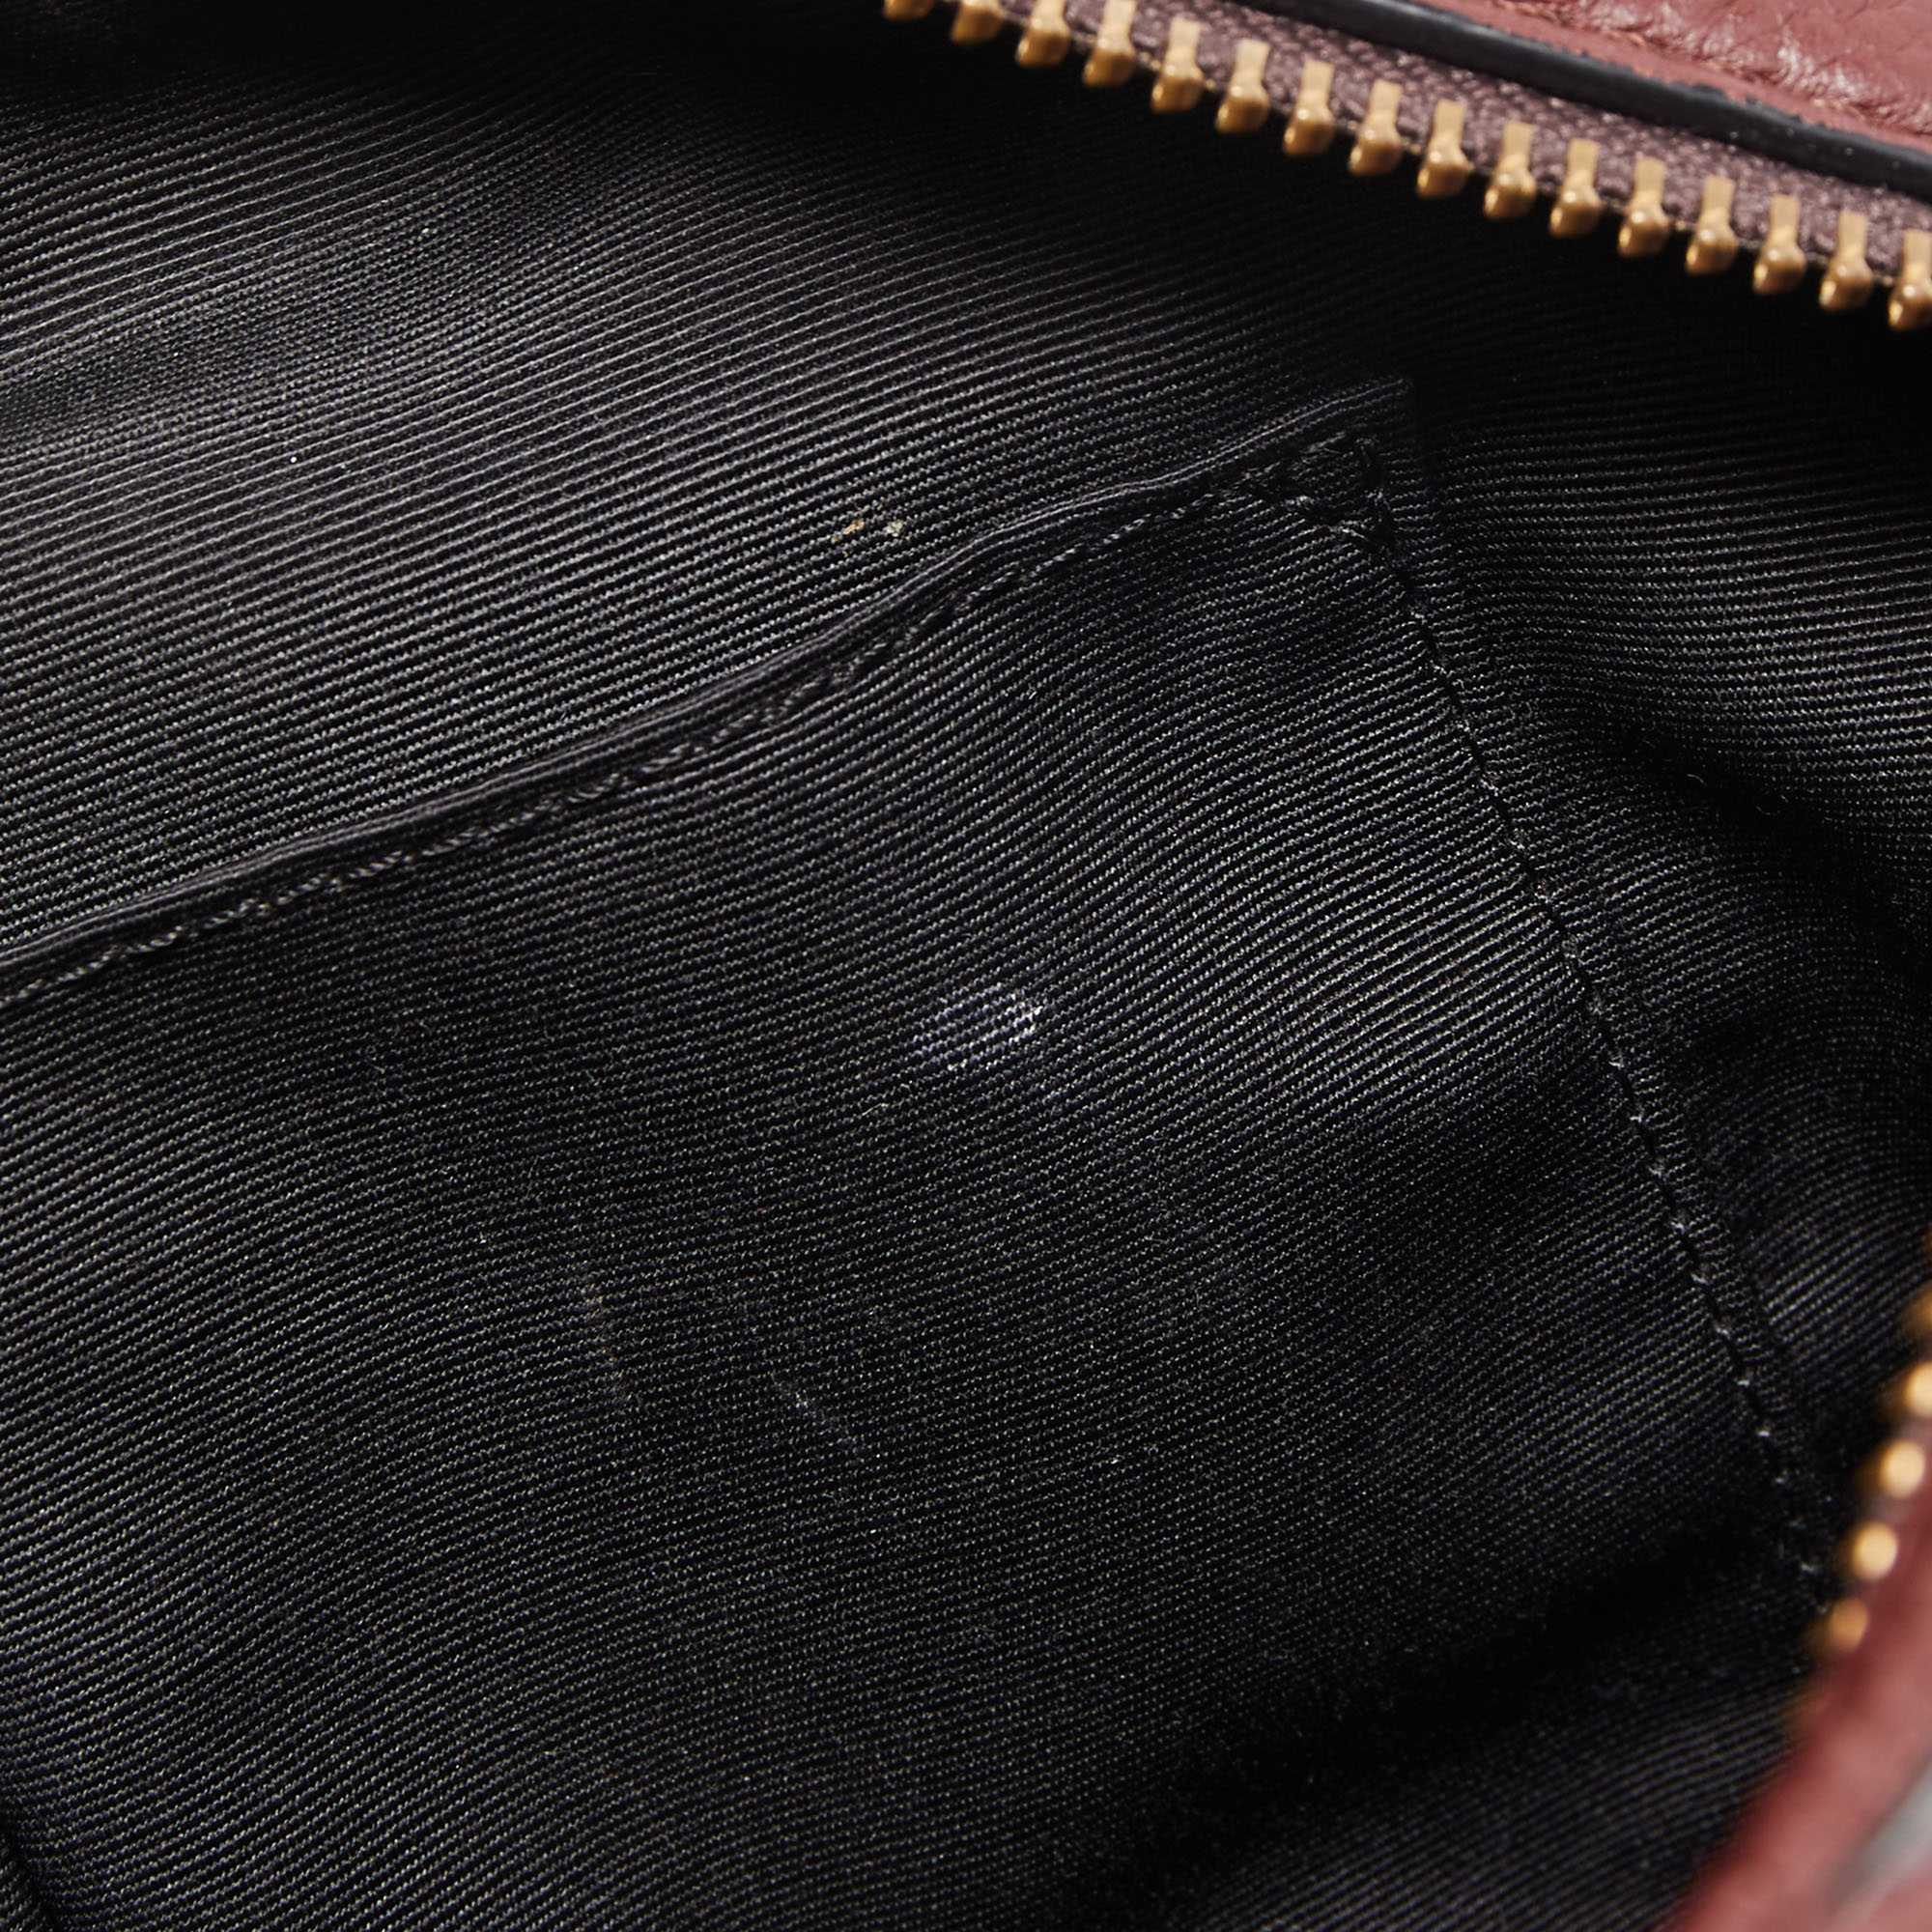 Marc Jacobs Burgundy Leather Recruit Bauletto Boston Bag